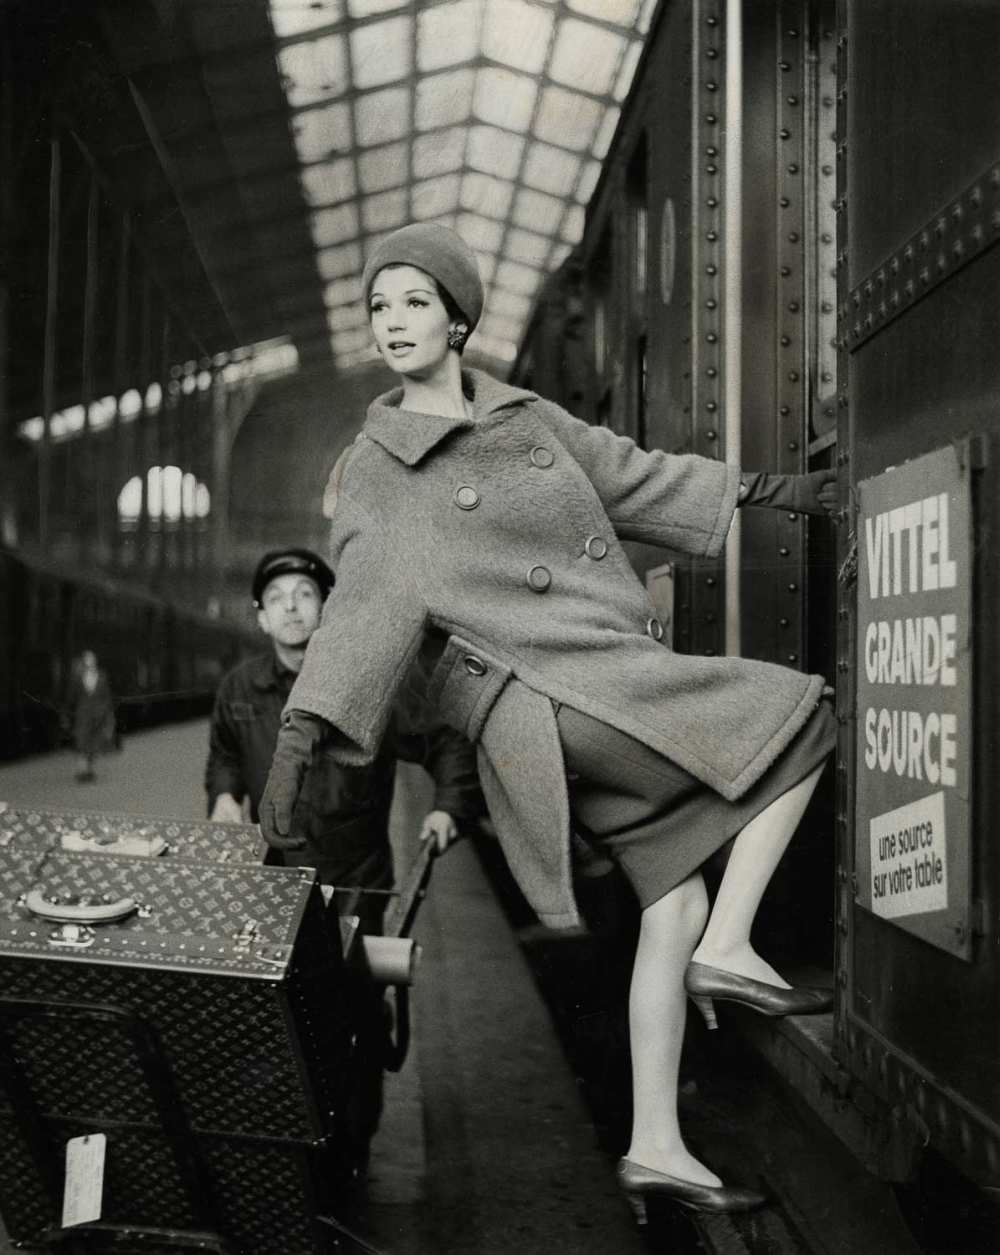 © Estate of Louis Faurer, Model hanging out of Train Car, Paris, 1960